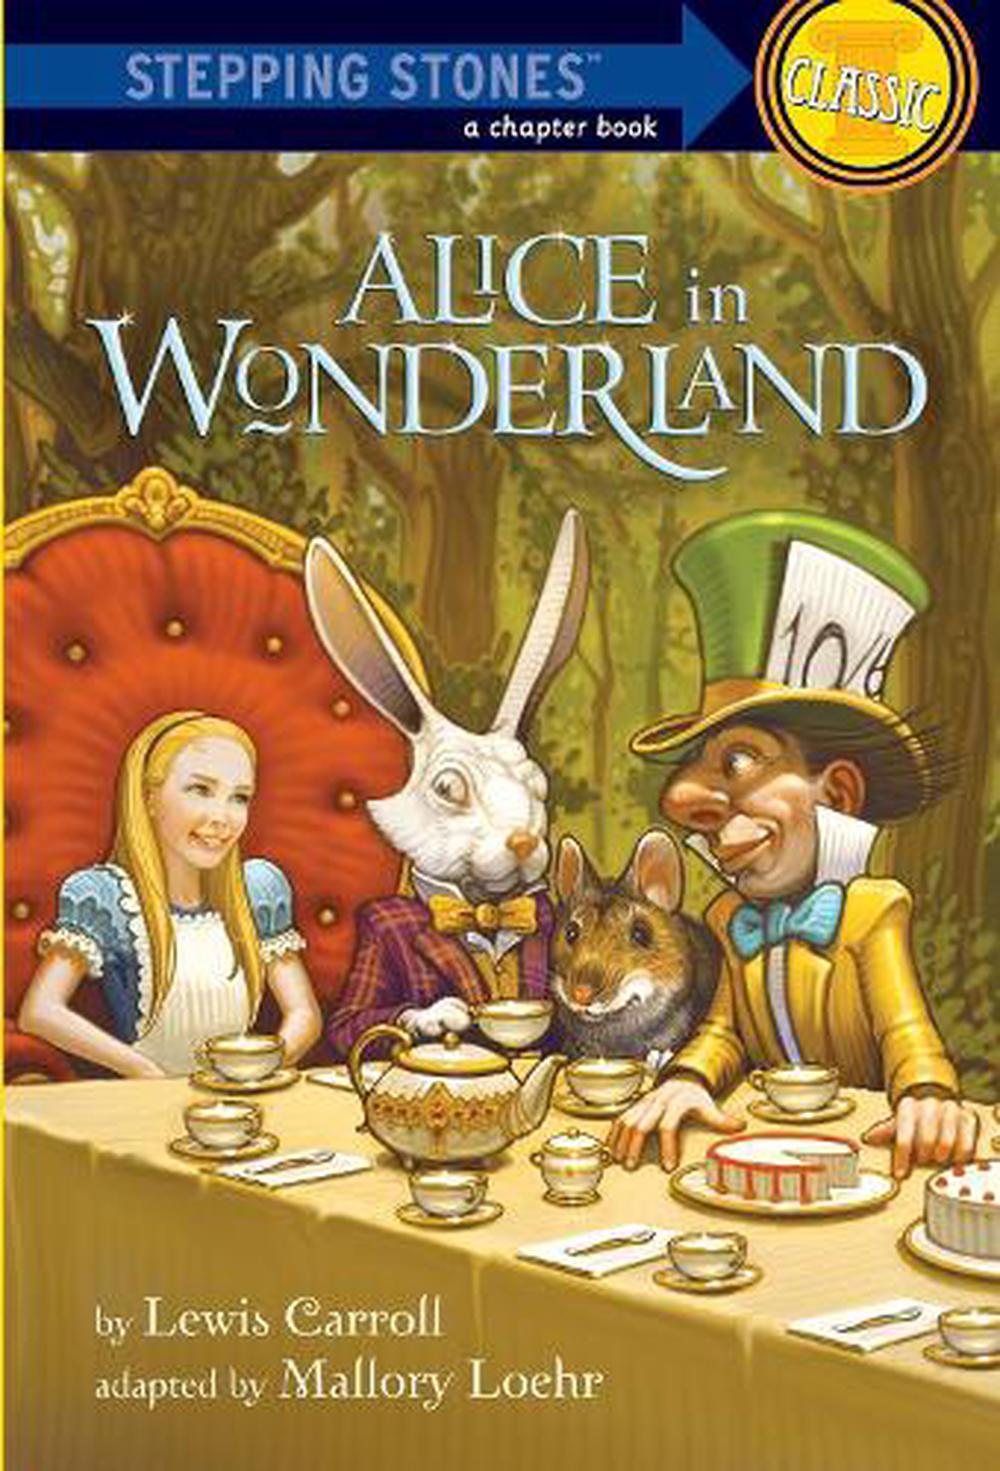 book review alice in wonderland